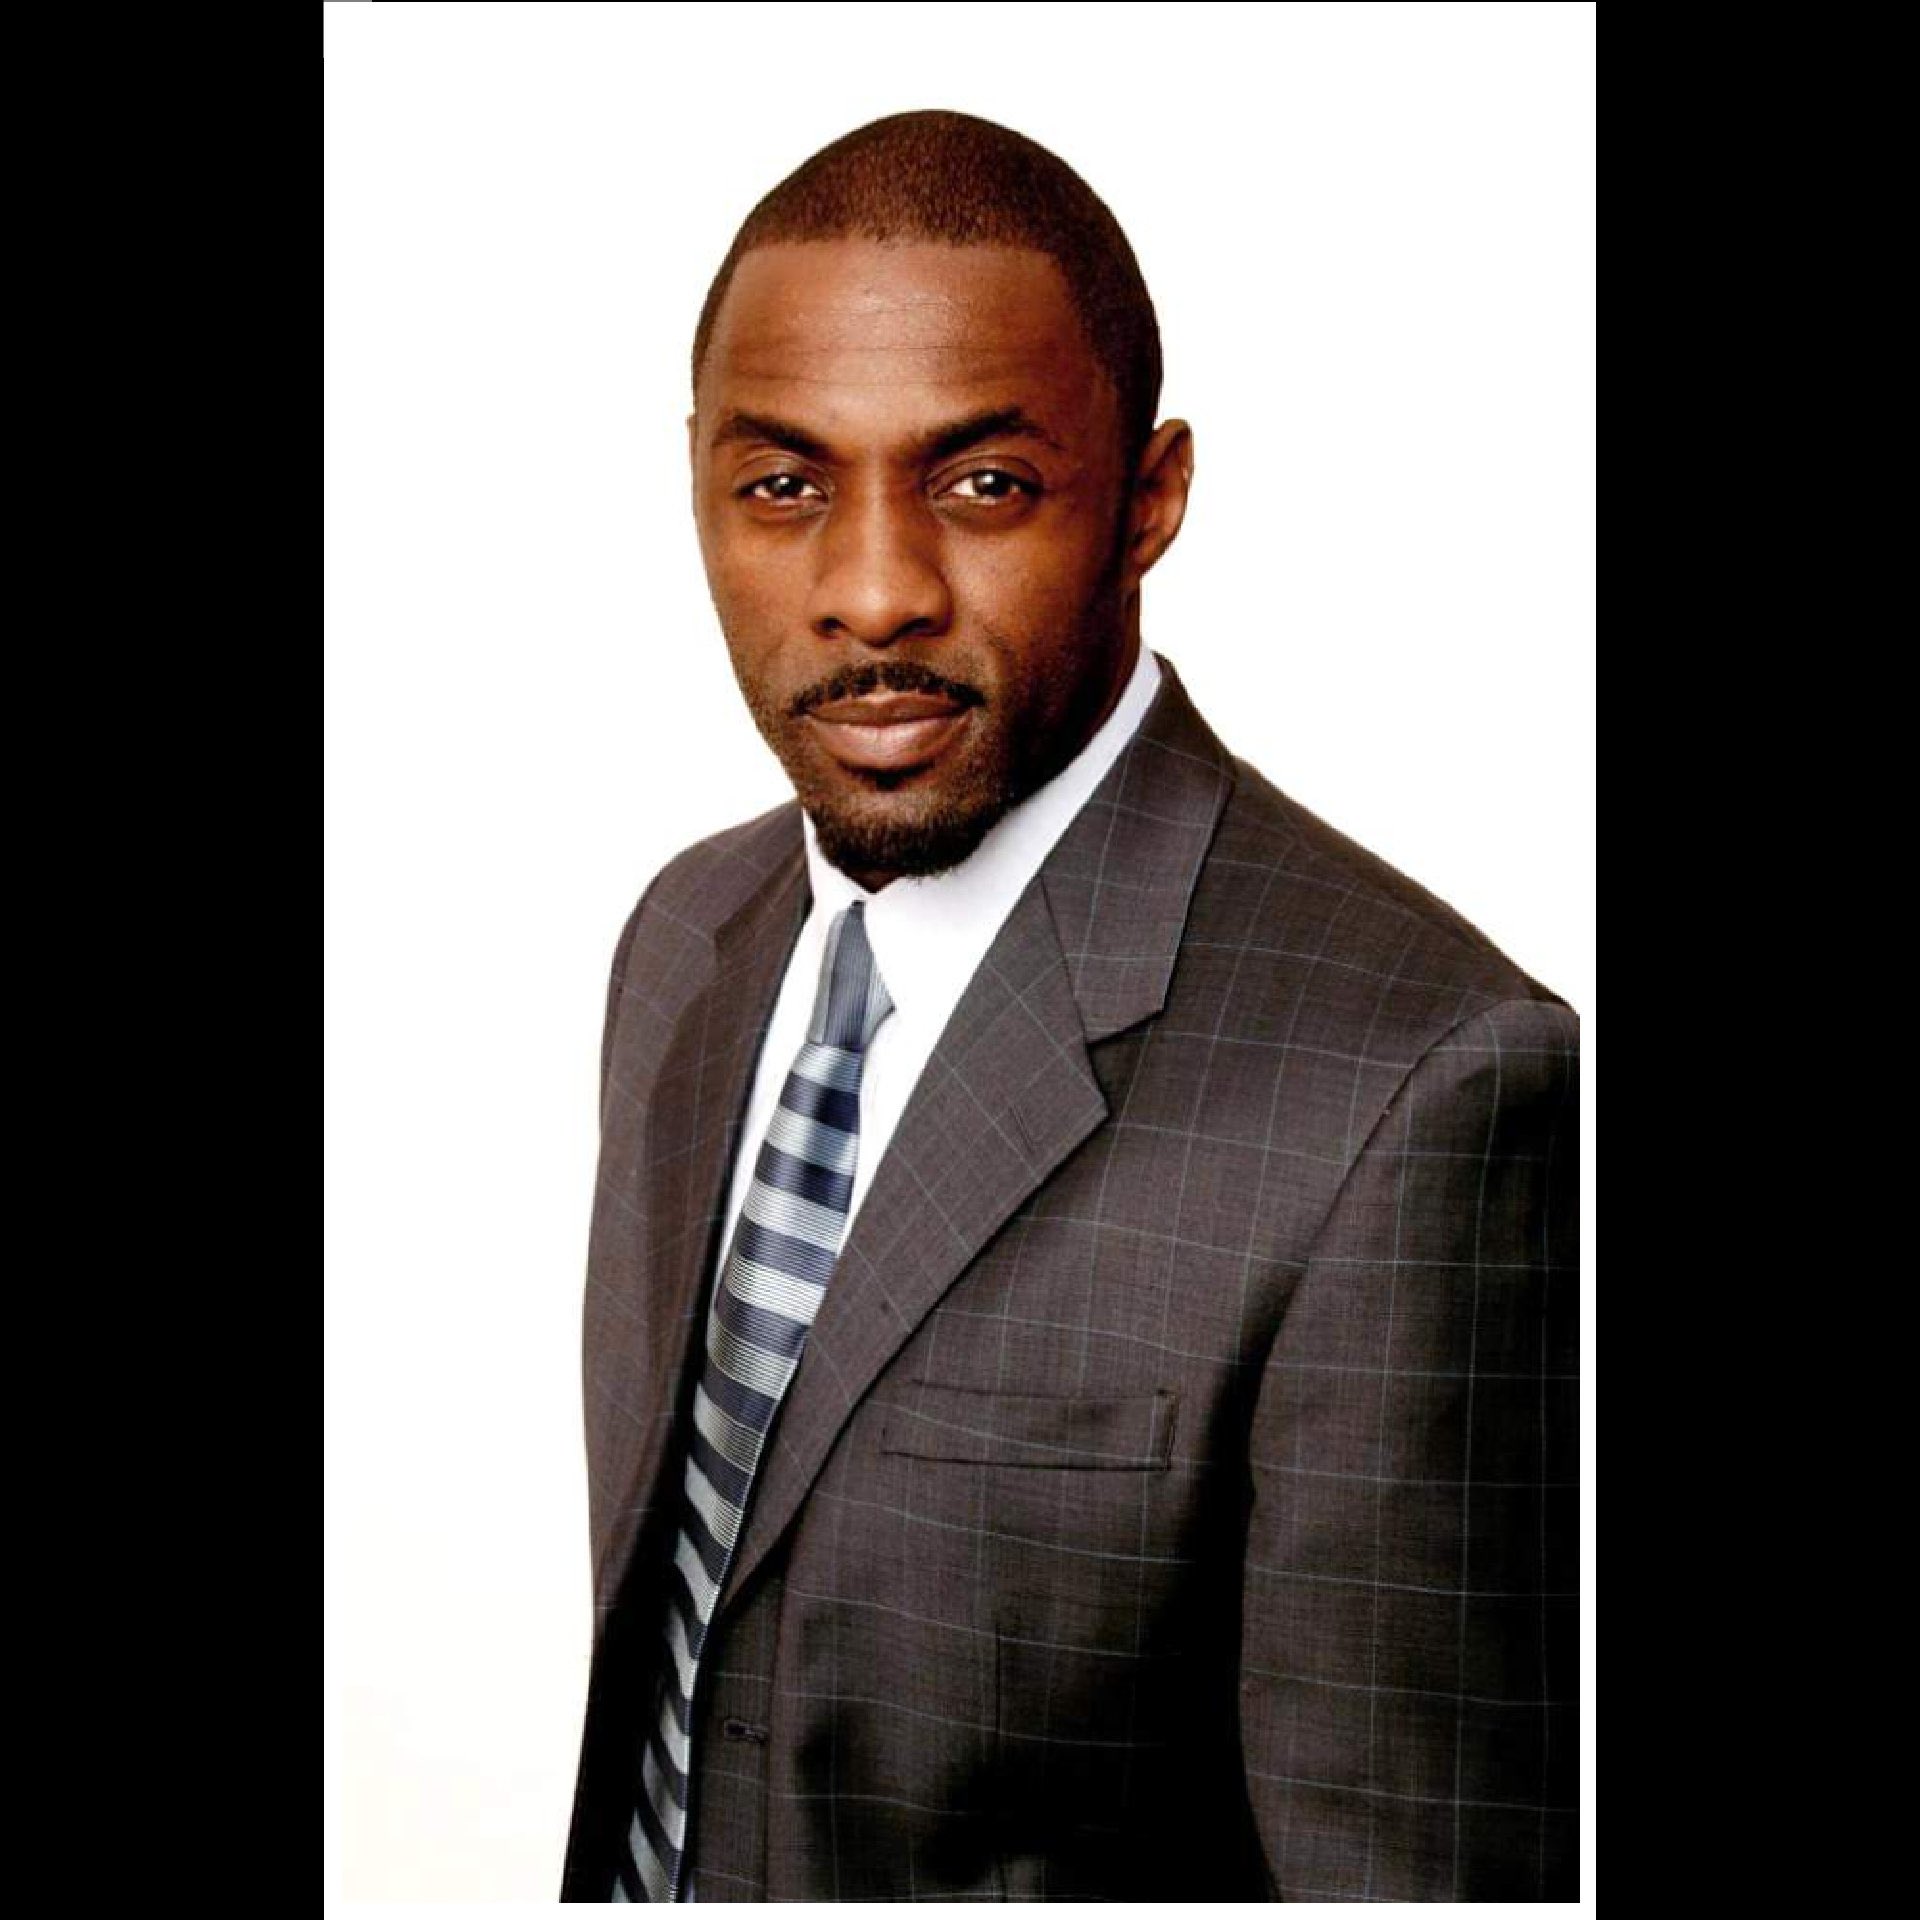 Happy Birthday to my good man Idris Elba. Keep on keeping on brother 